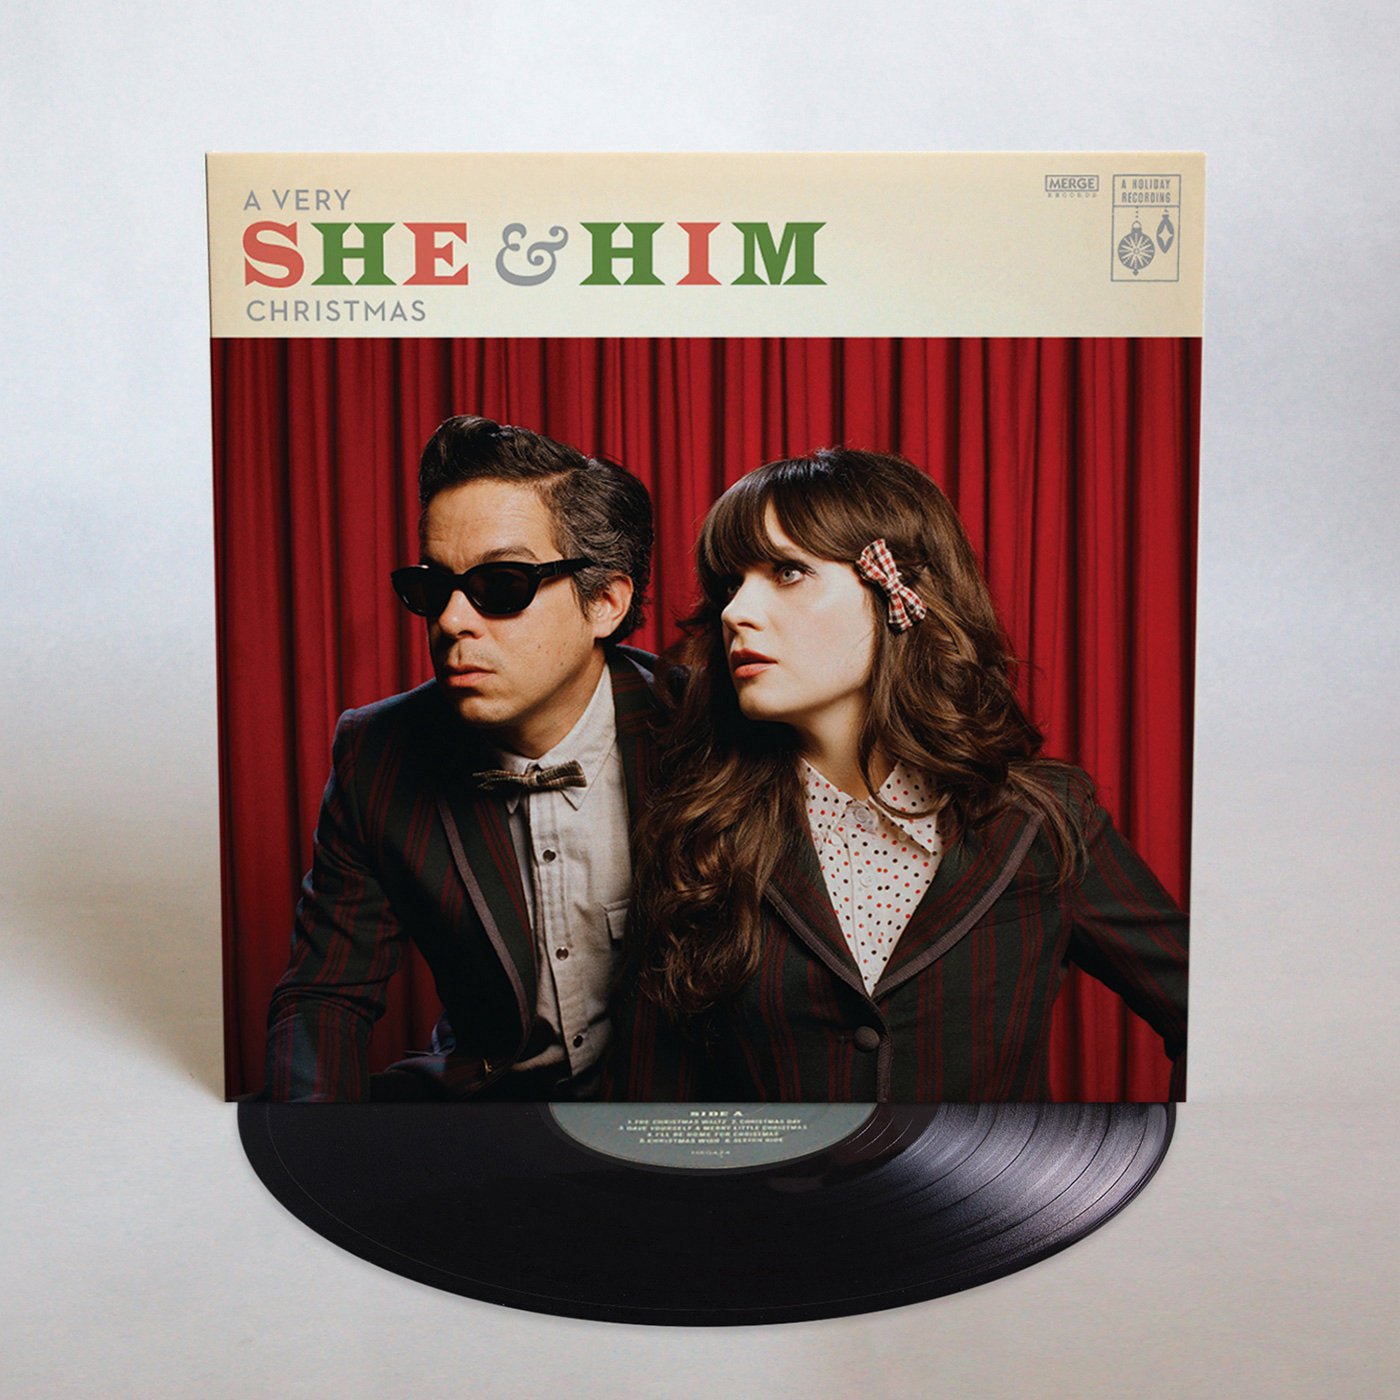 She & Him: A Very She & Him Christmas: Black Vinyl - Steadfast Records